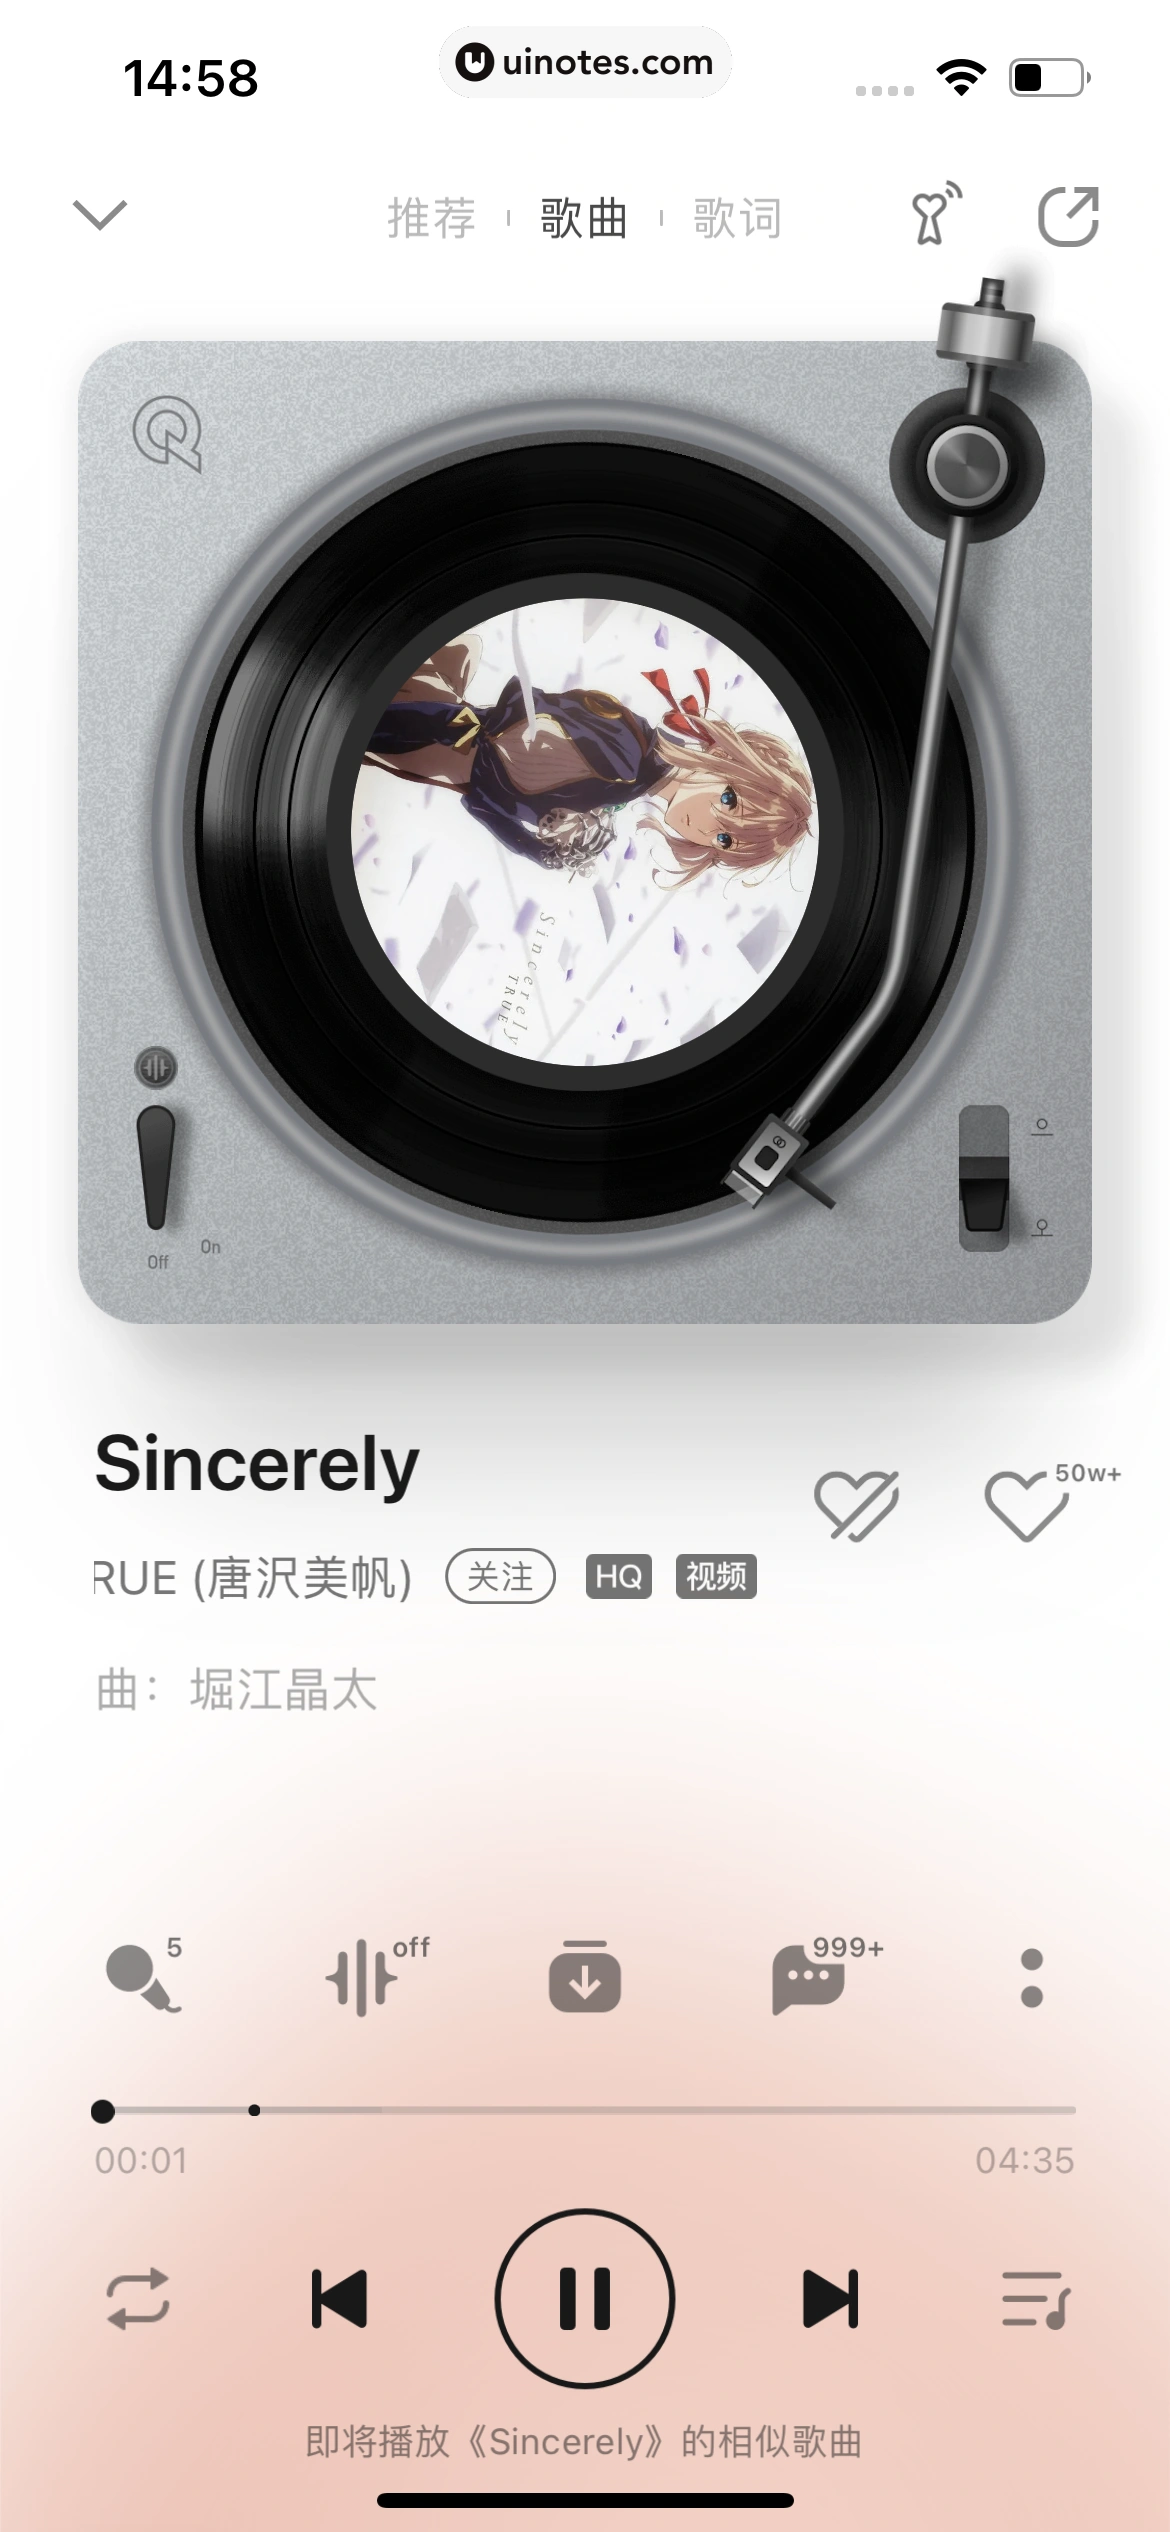 QQ音乐 App 截图 249 - UI Notes